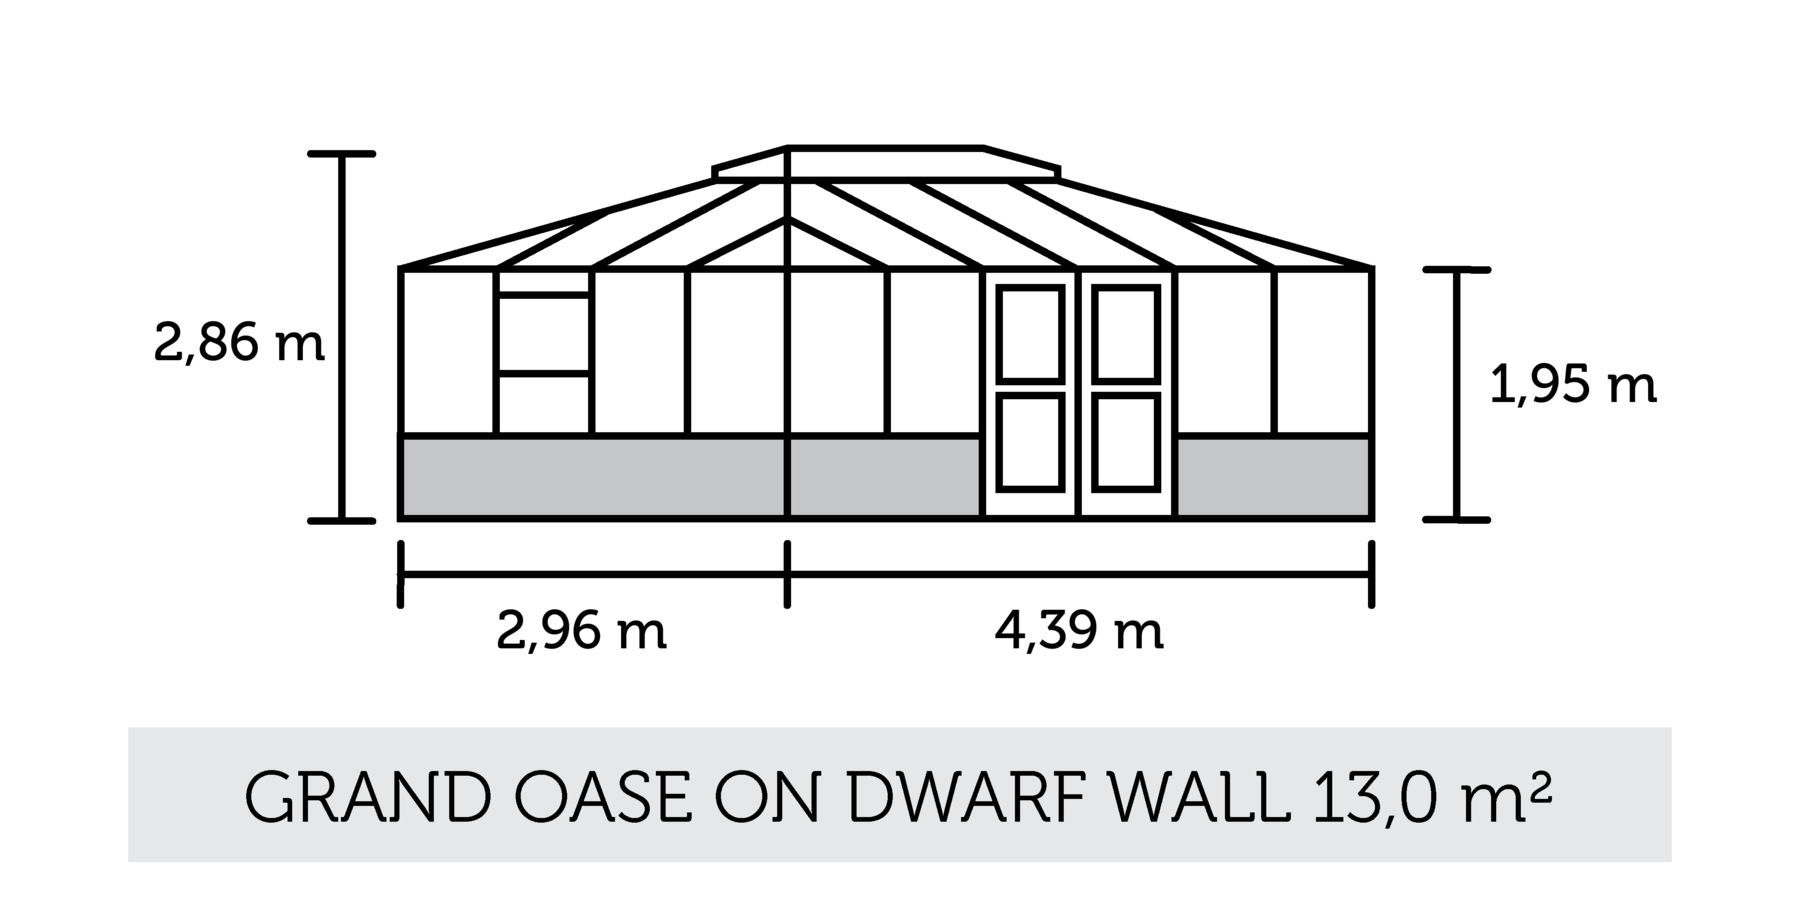 Juliana Grand Oase - 13,0 m2 dwarf wall model anthracite/black 3 mm LPT